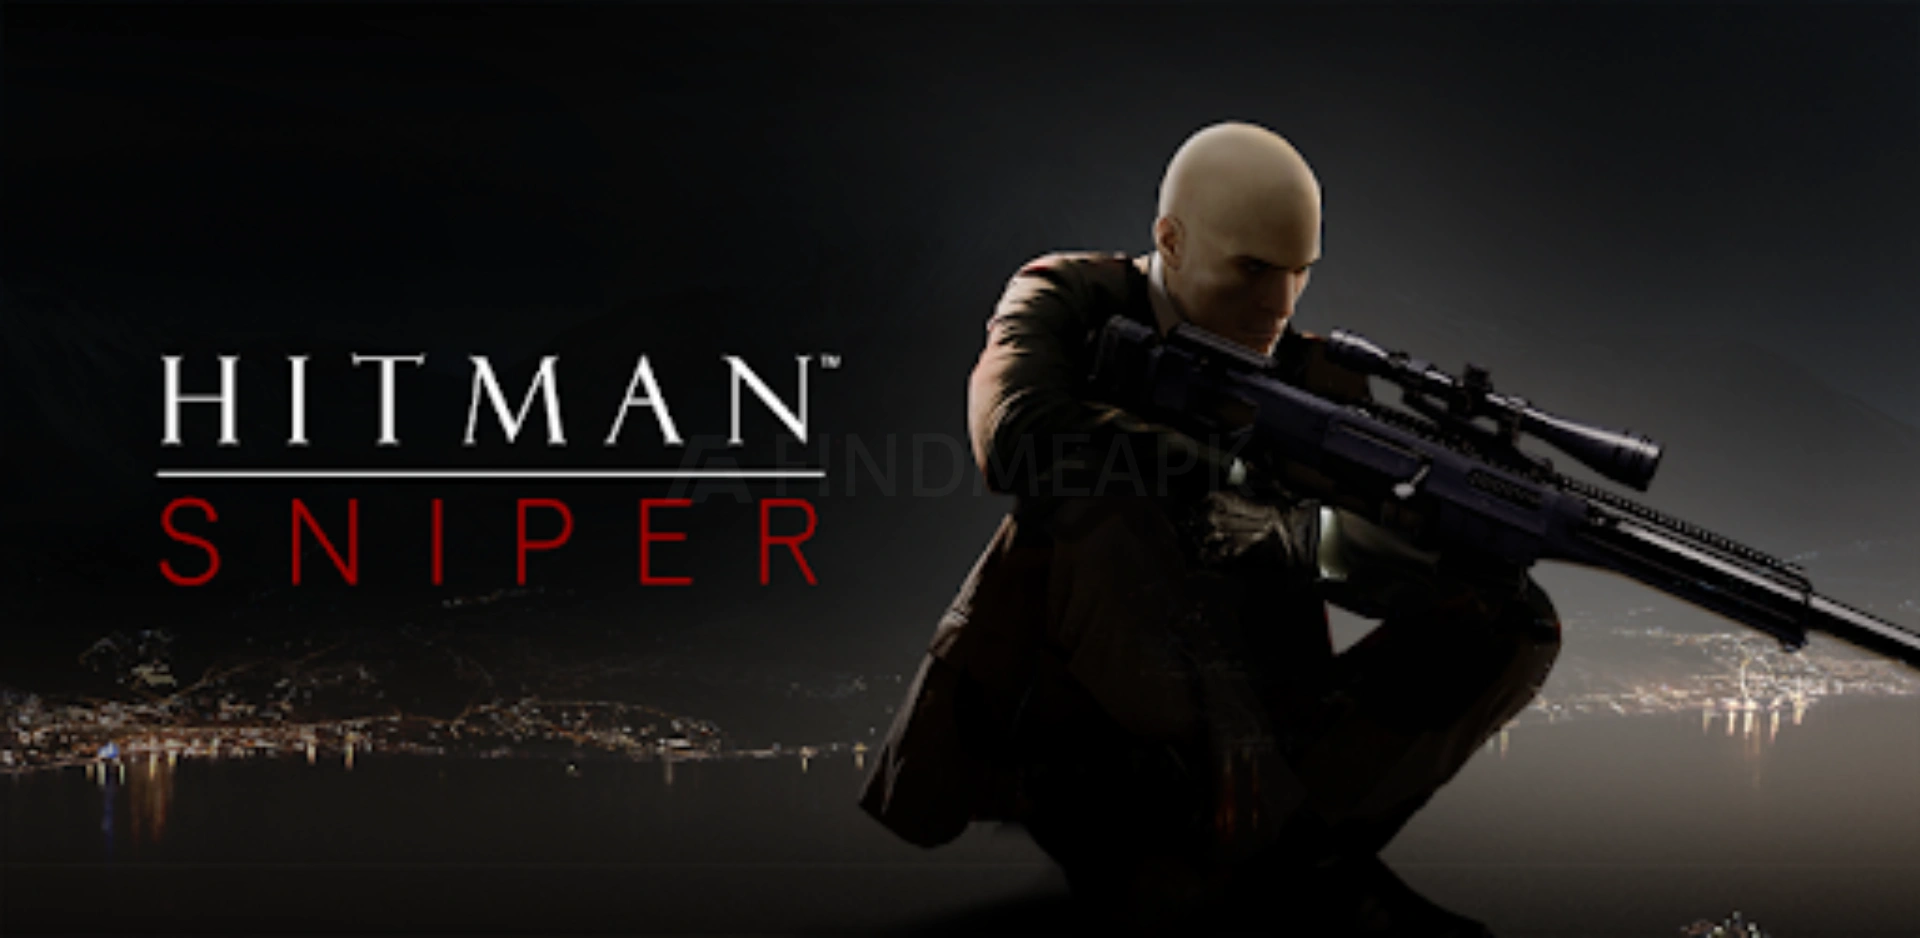 Hitman Sniper Main Image